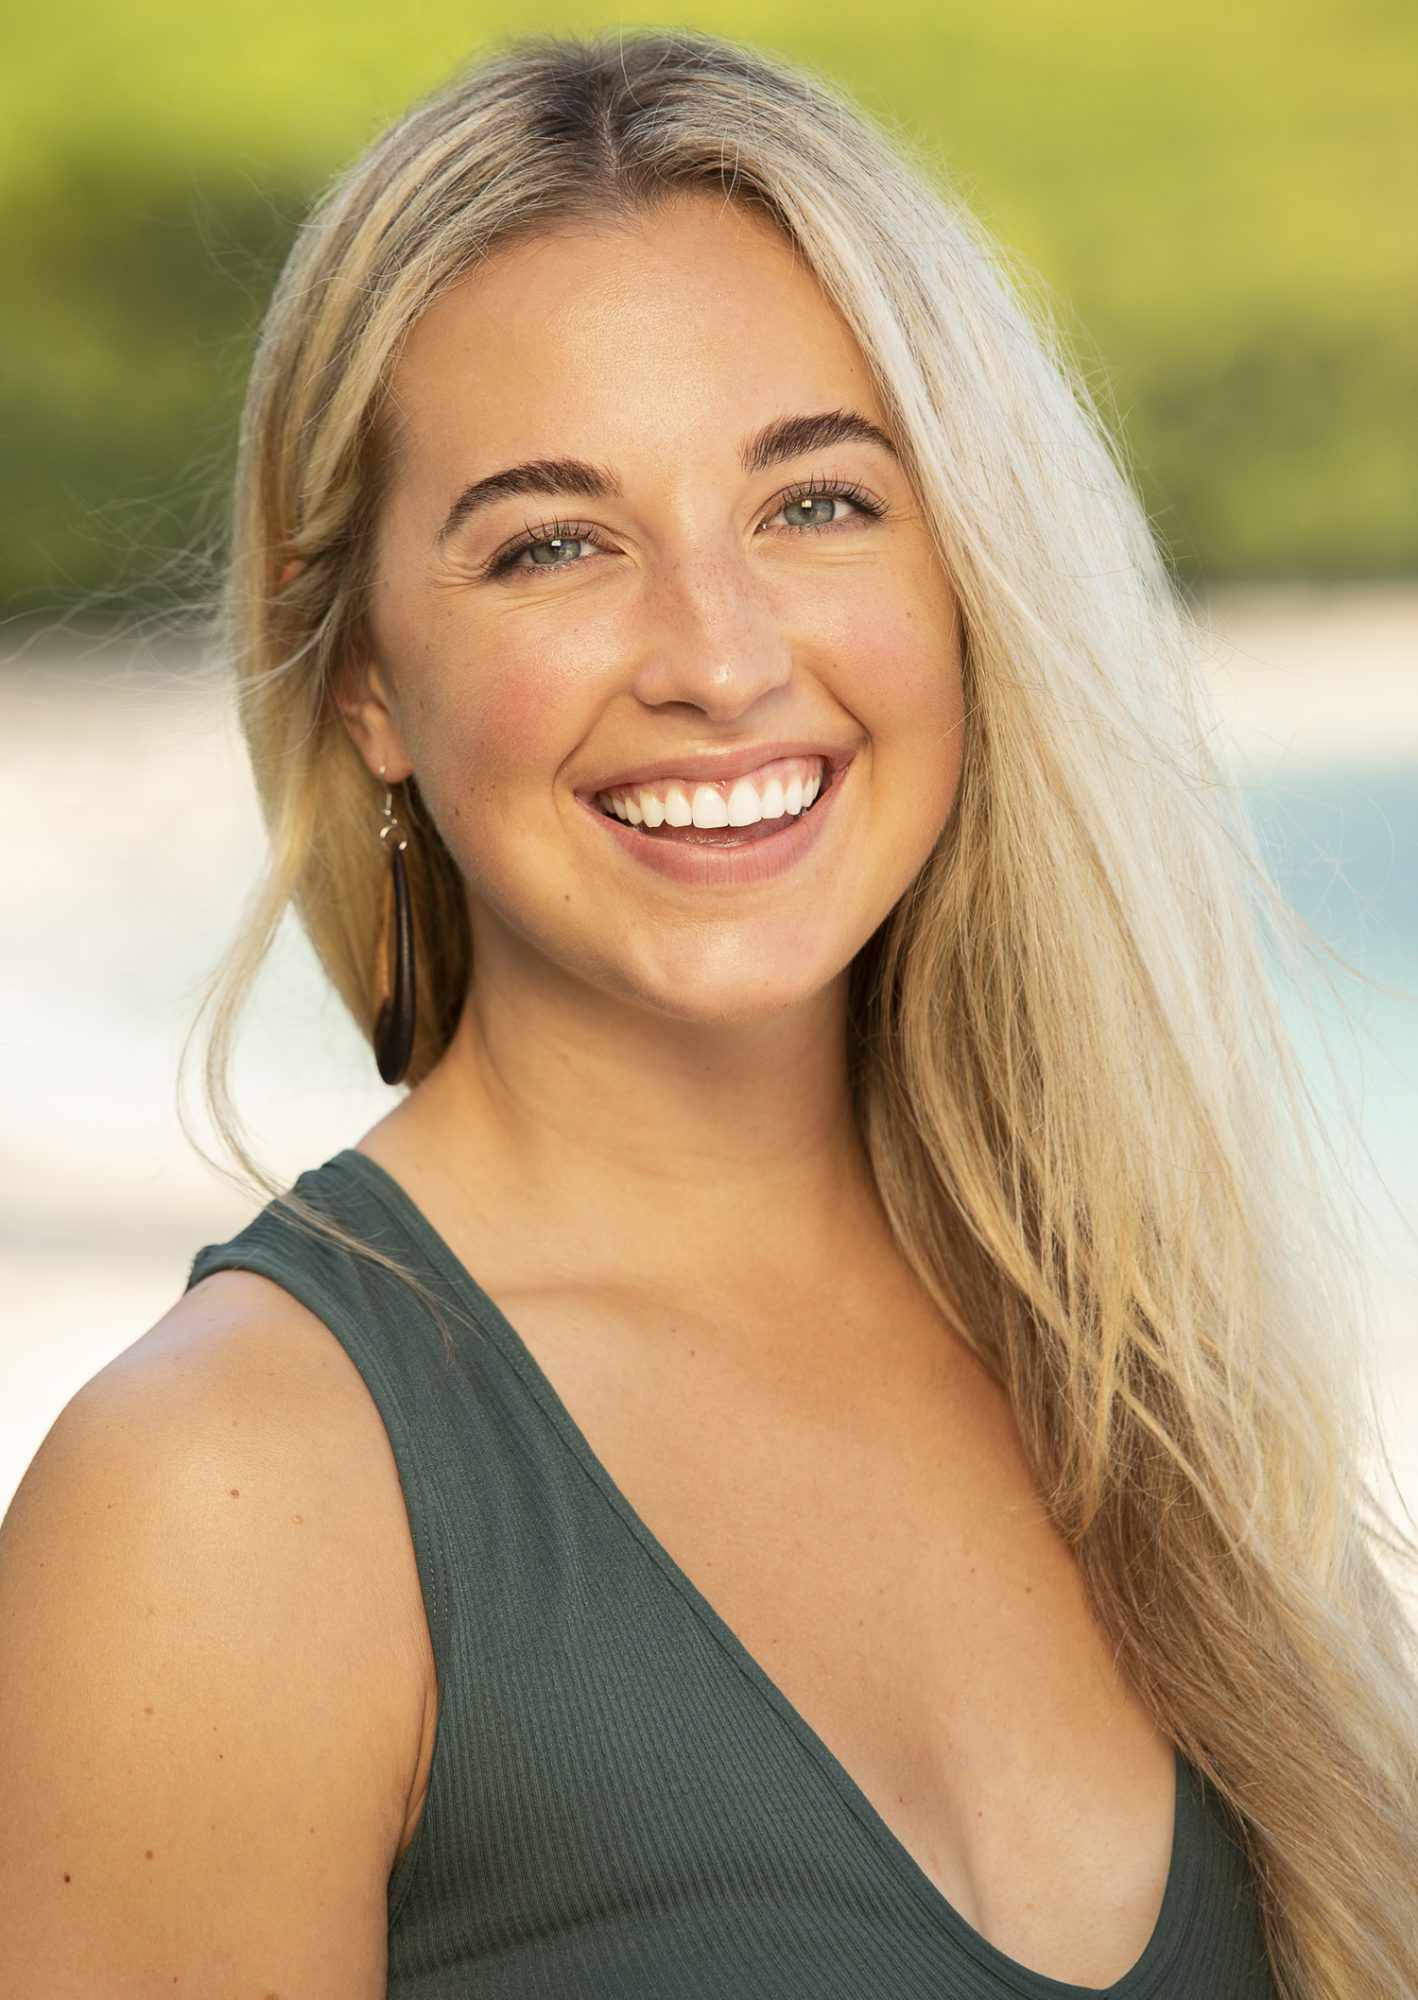 Tori Meehan from Survivor 42